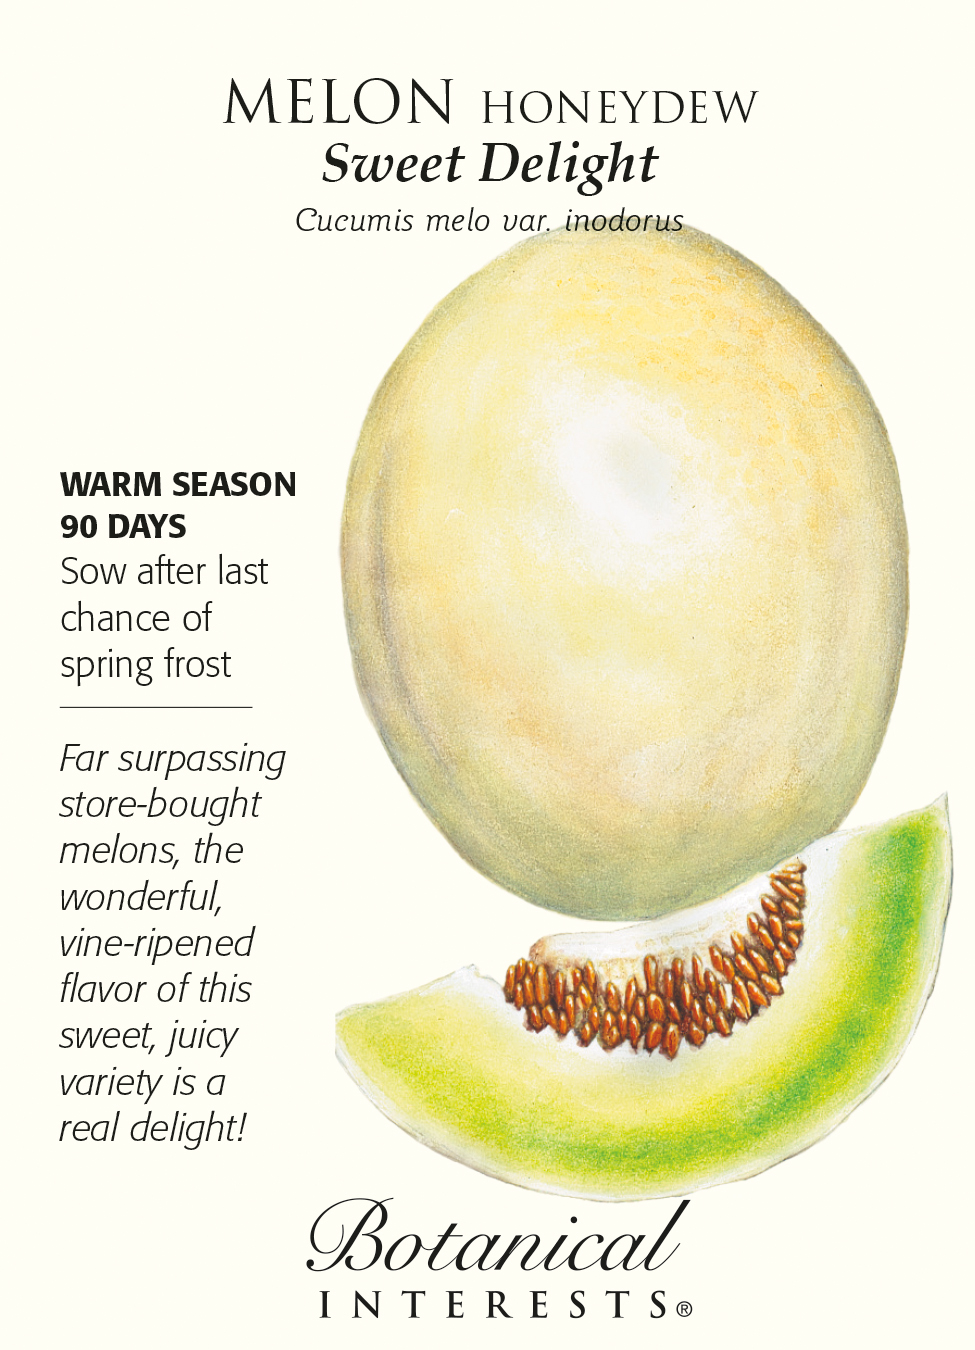 Honeydew Melon Market Summary - Produce Blue Book